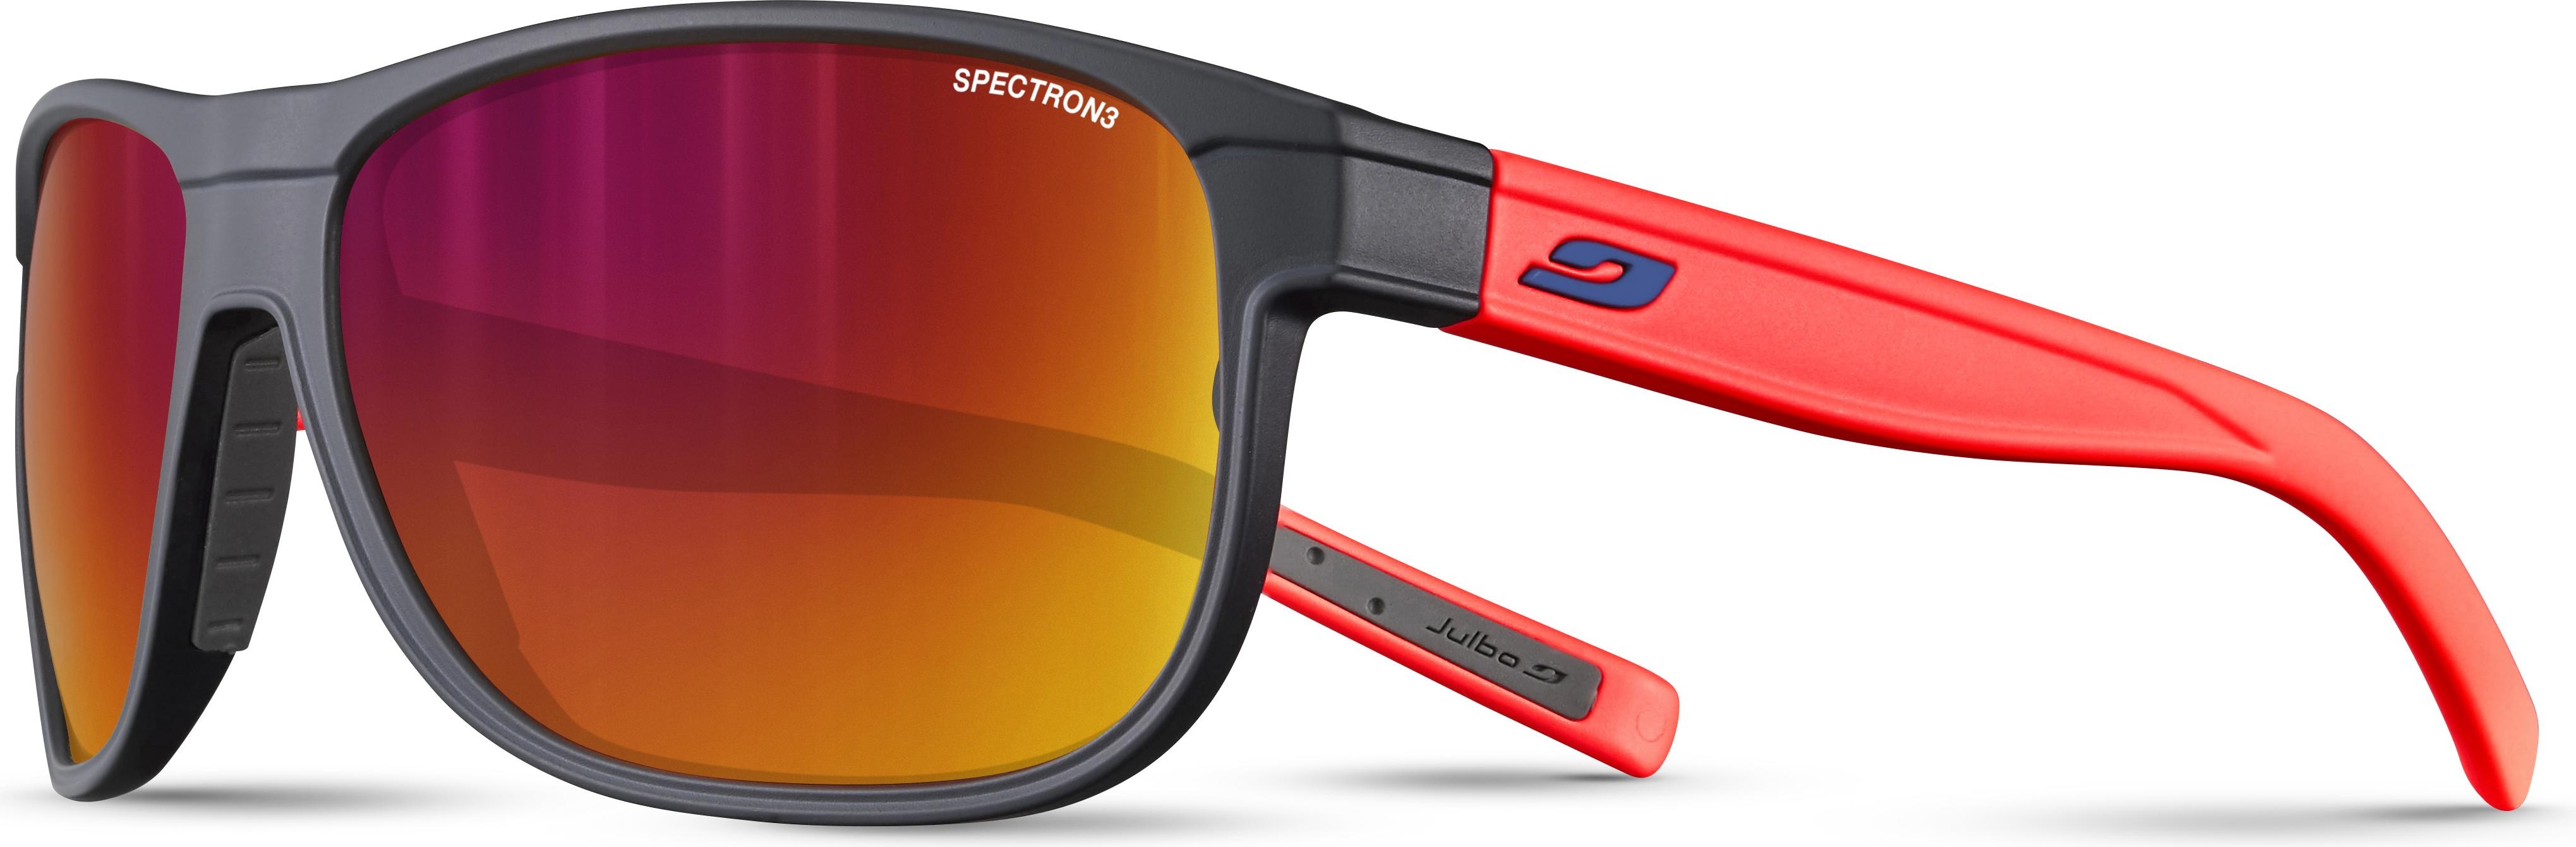 Julbo, Herren, Sportbrille, Renegade M Spectron 3 Sportbrille (Rot), Blau, Orange